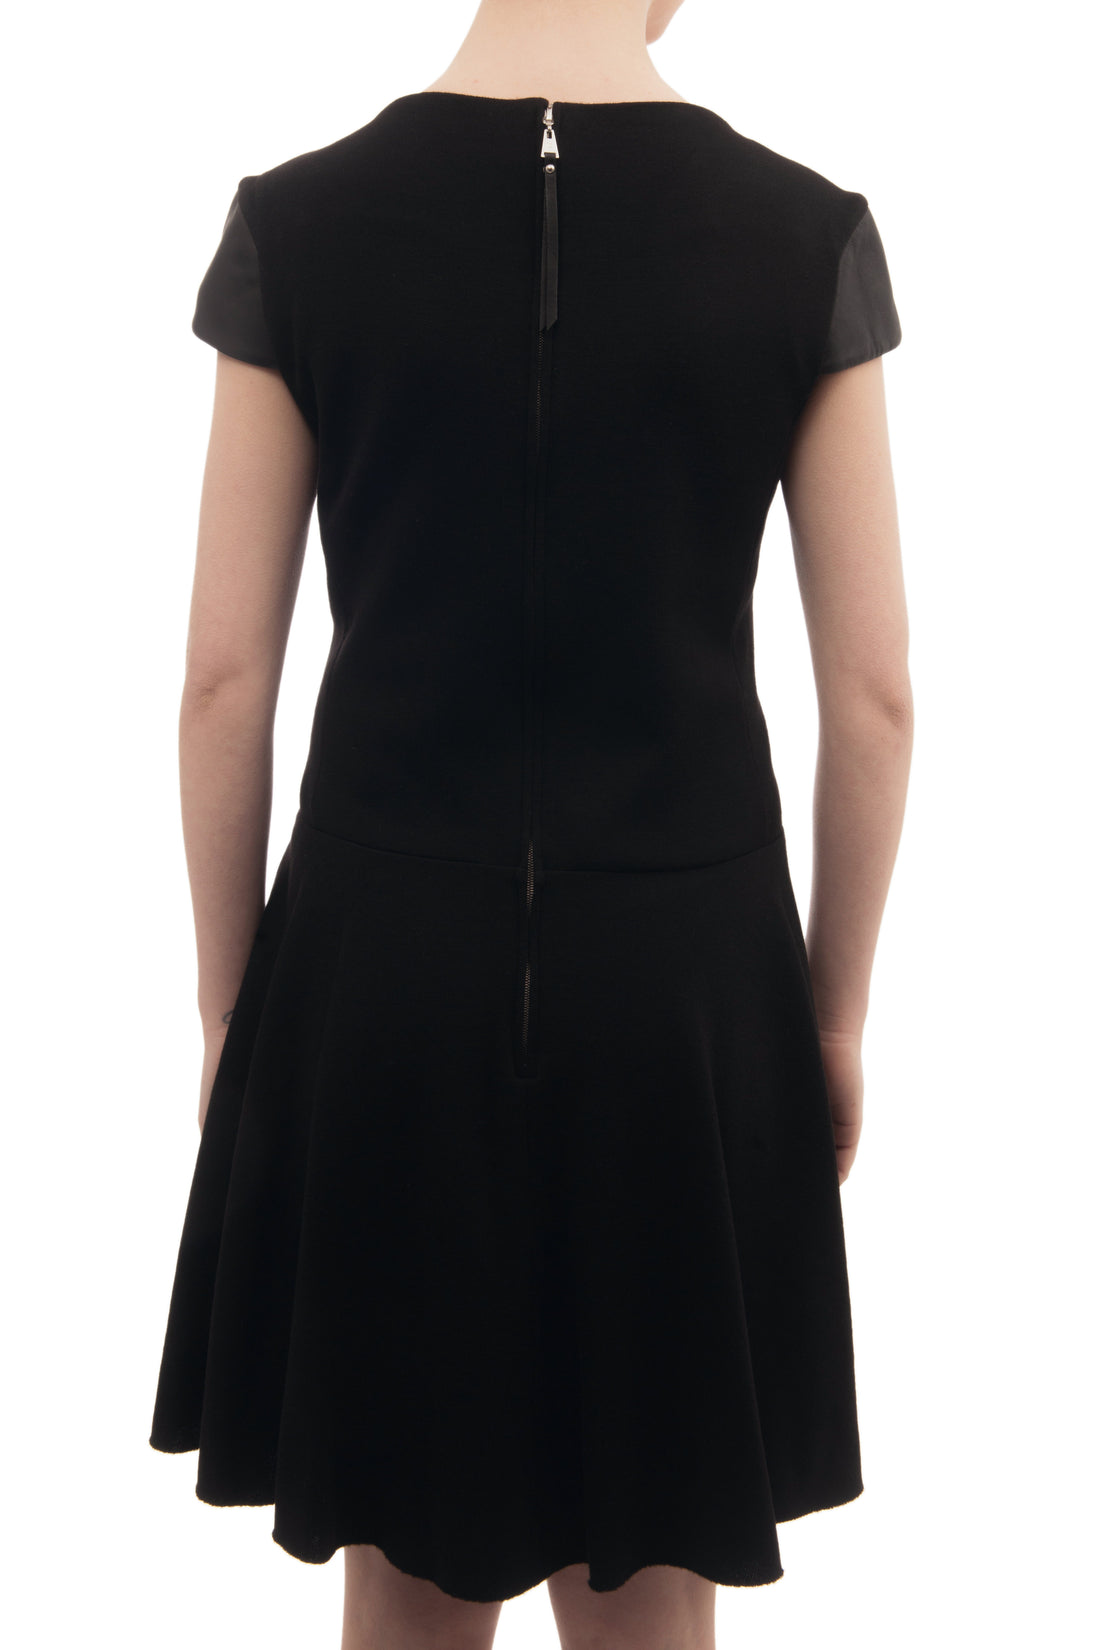 Louis Vuitton Black Wool Knit Short Sleeve Sweater Dress Size S